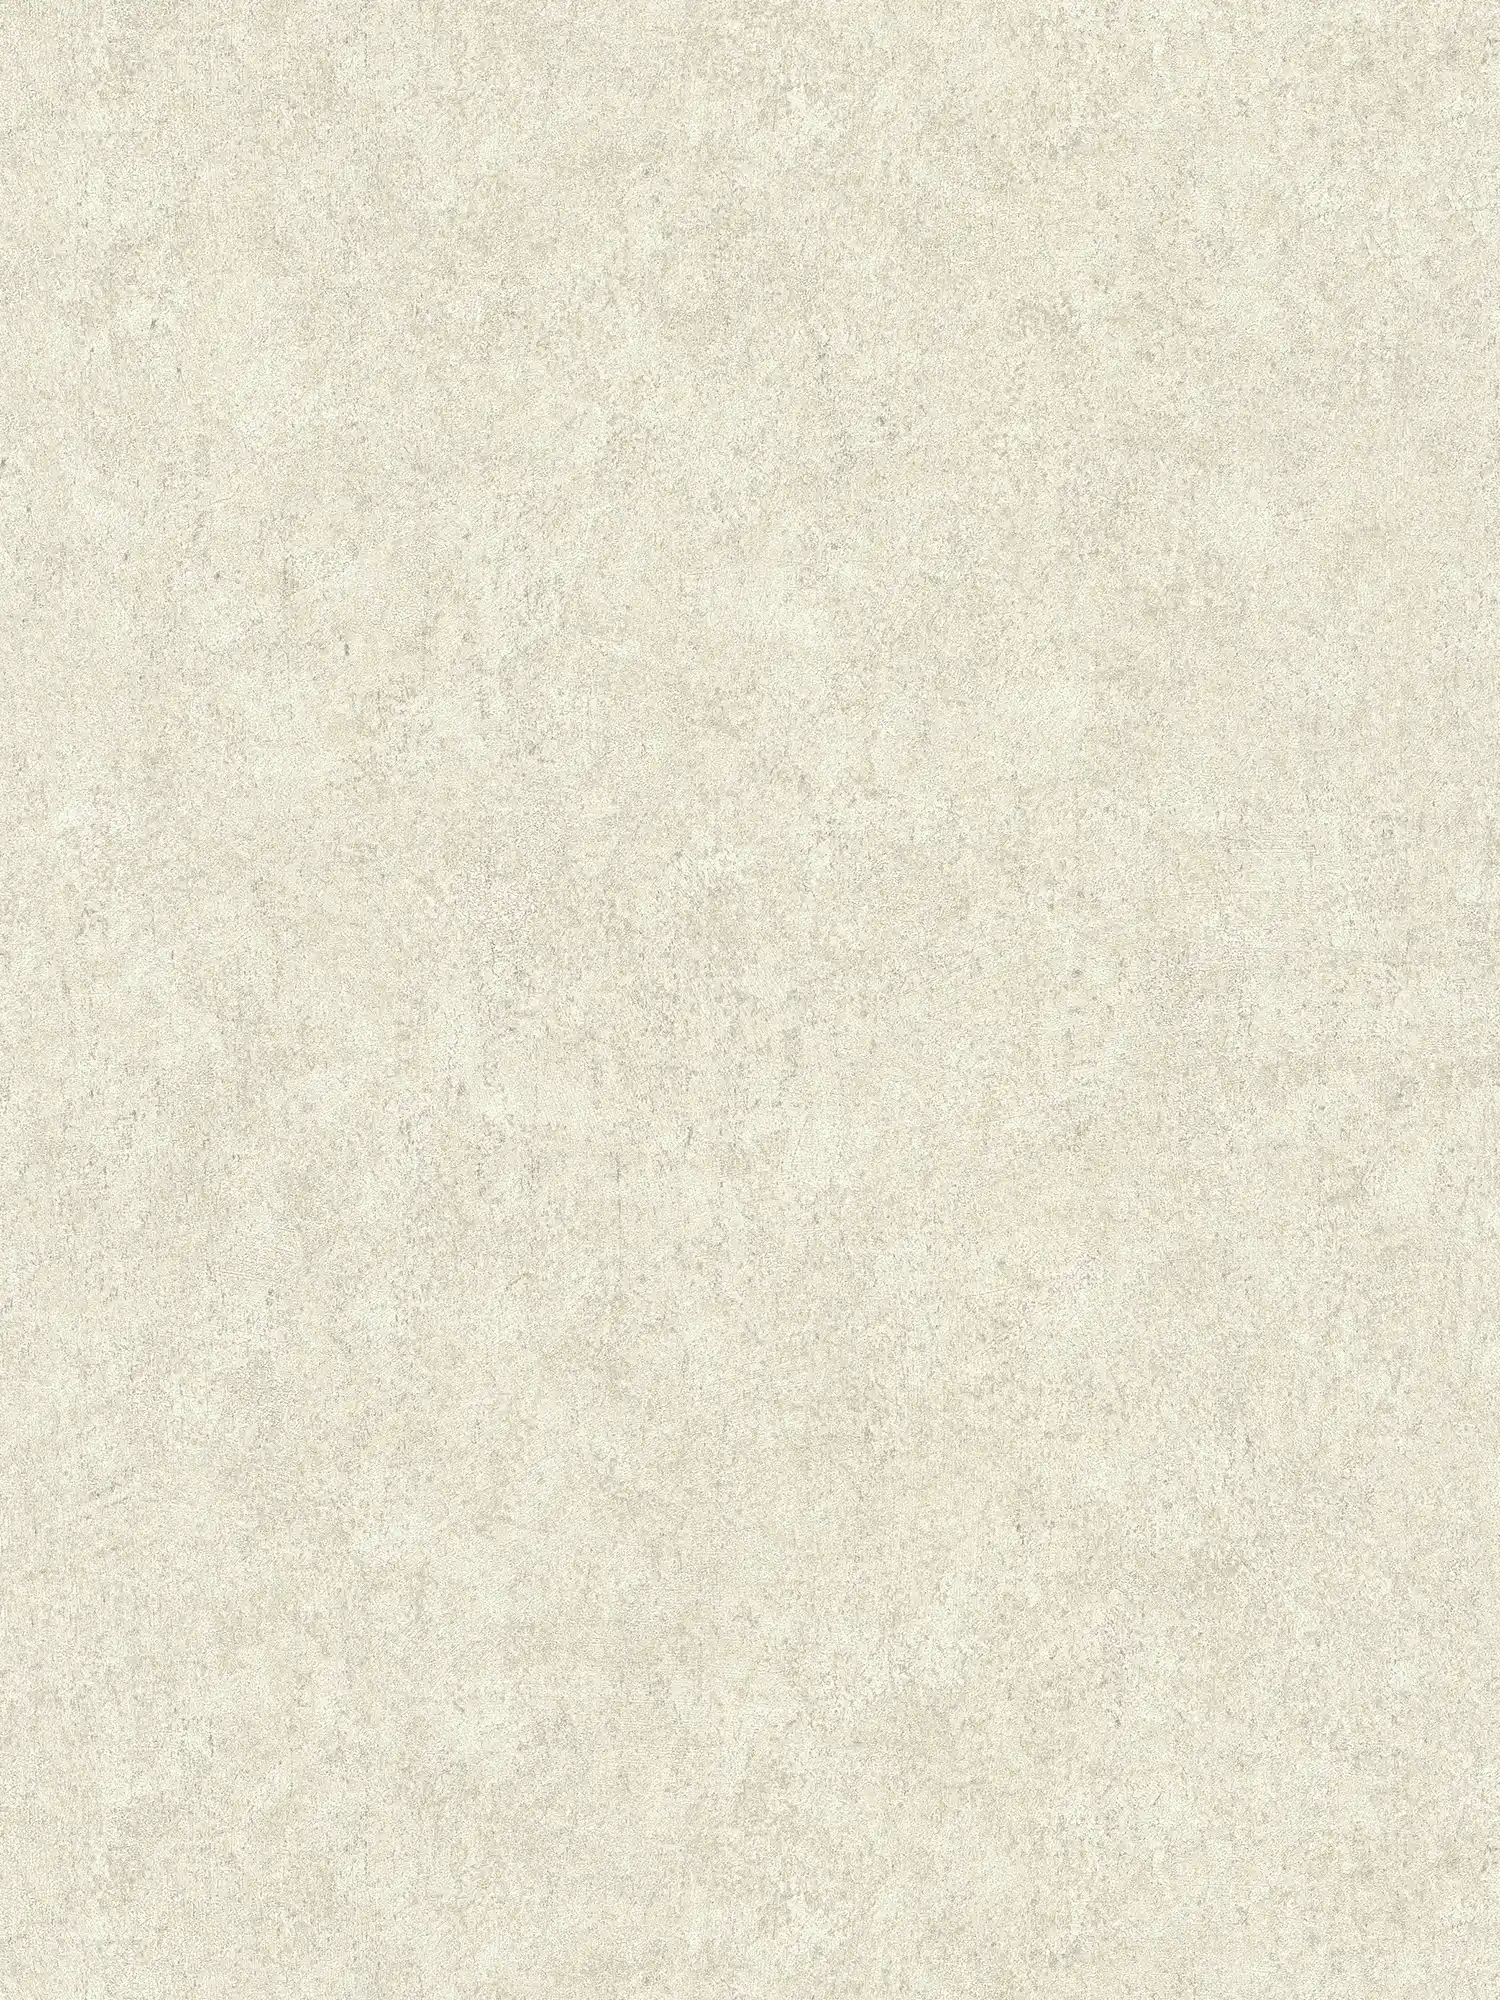 Plain wallpaper beige, satin with plaster texture
